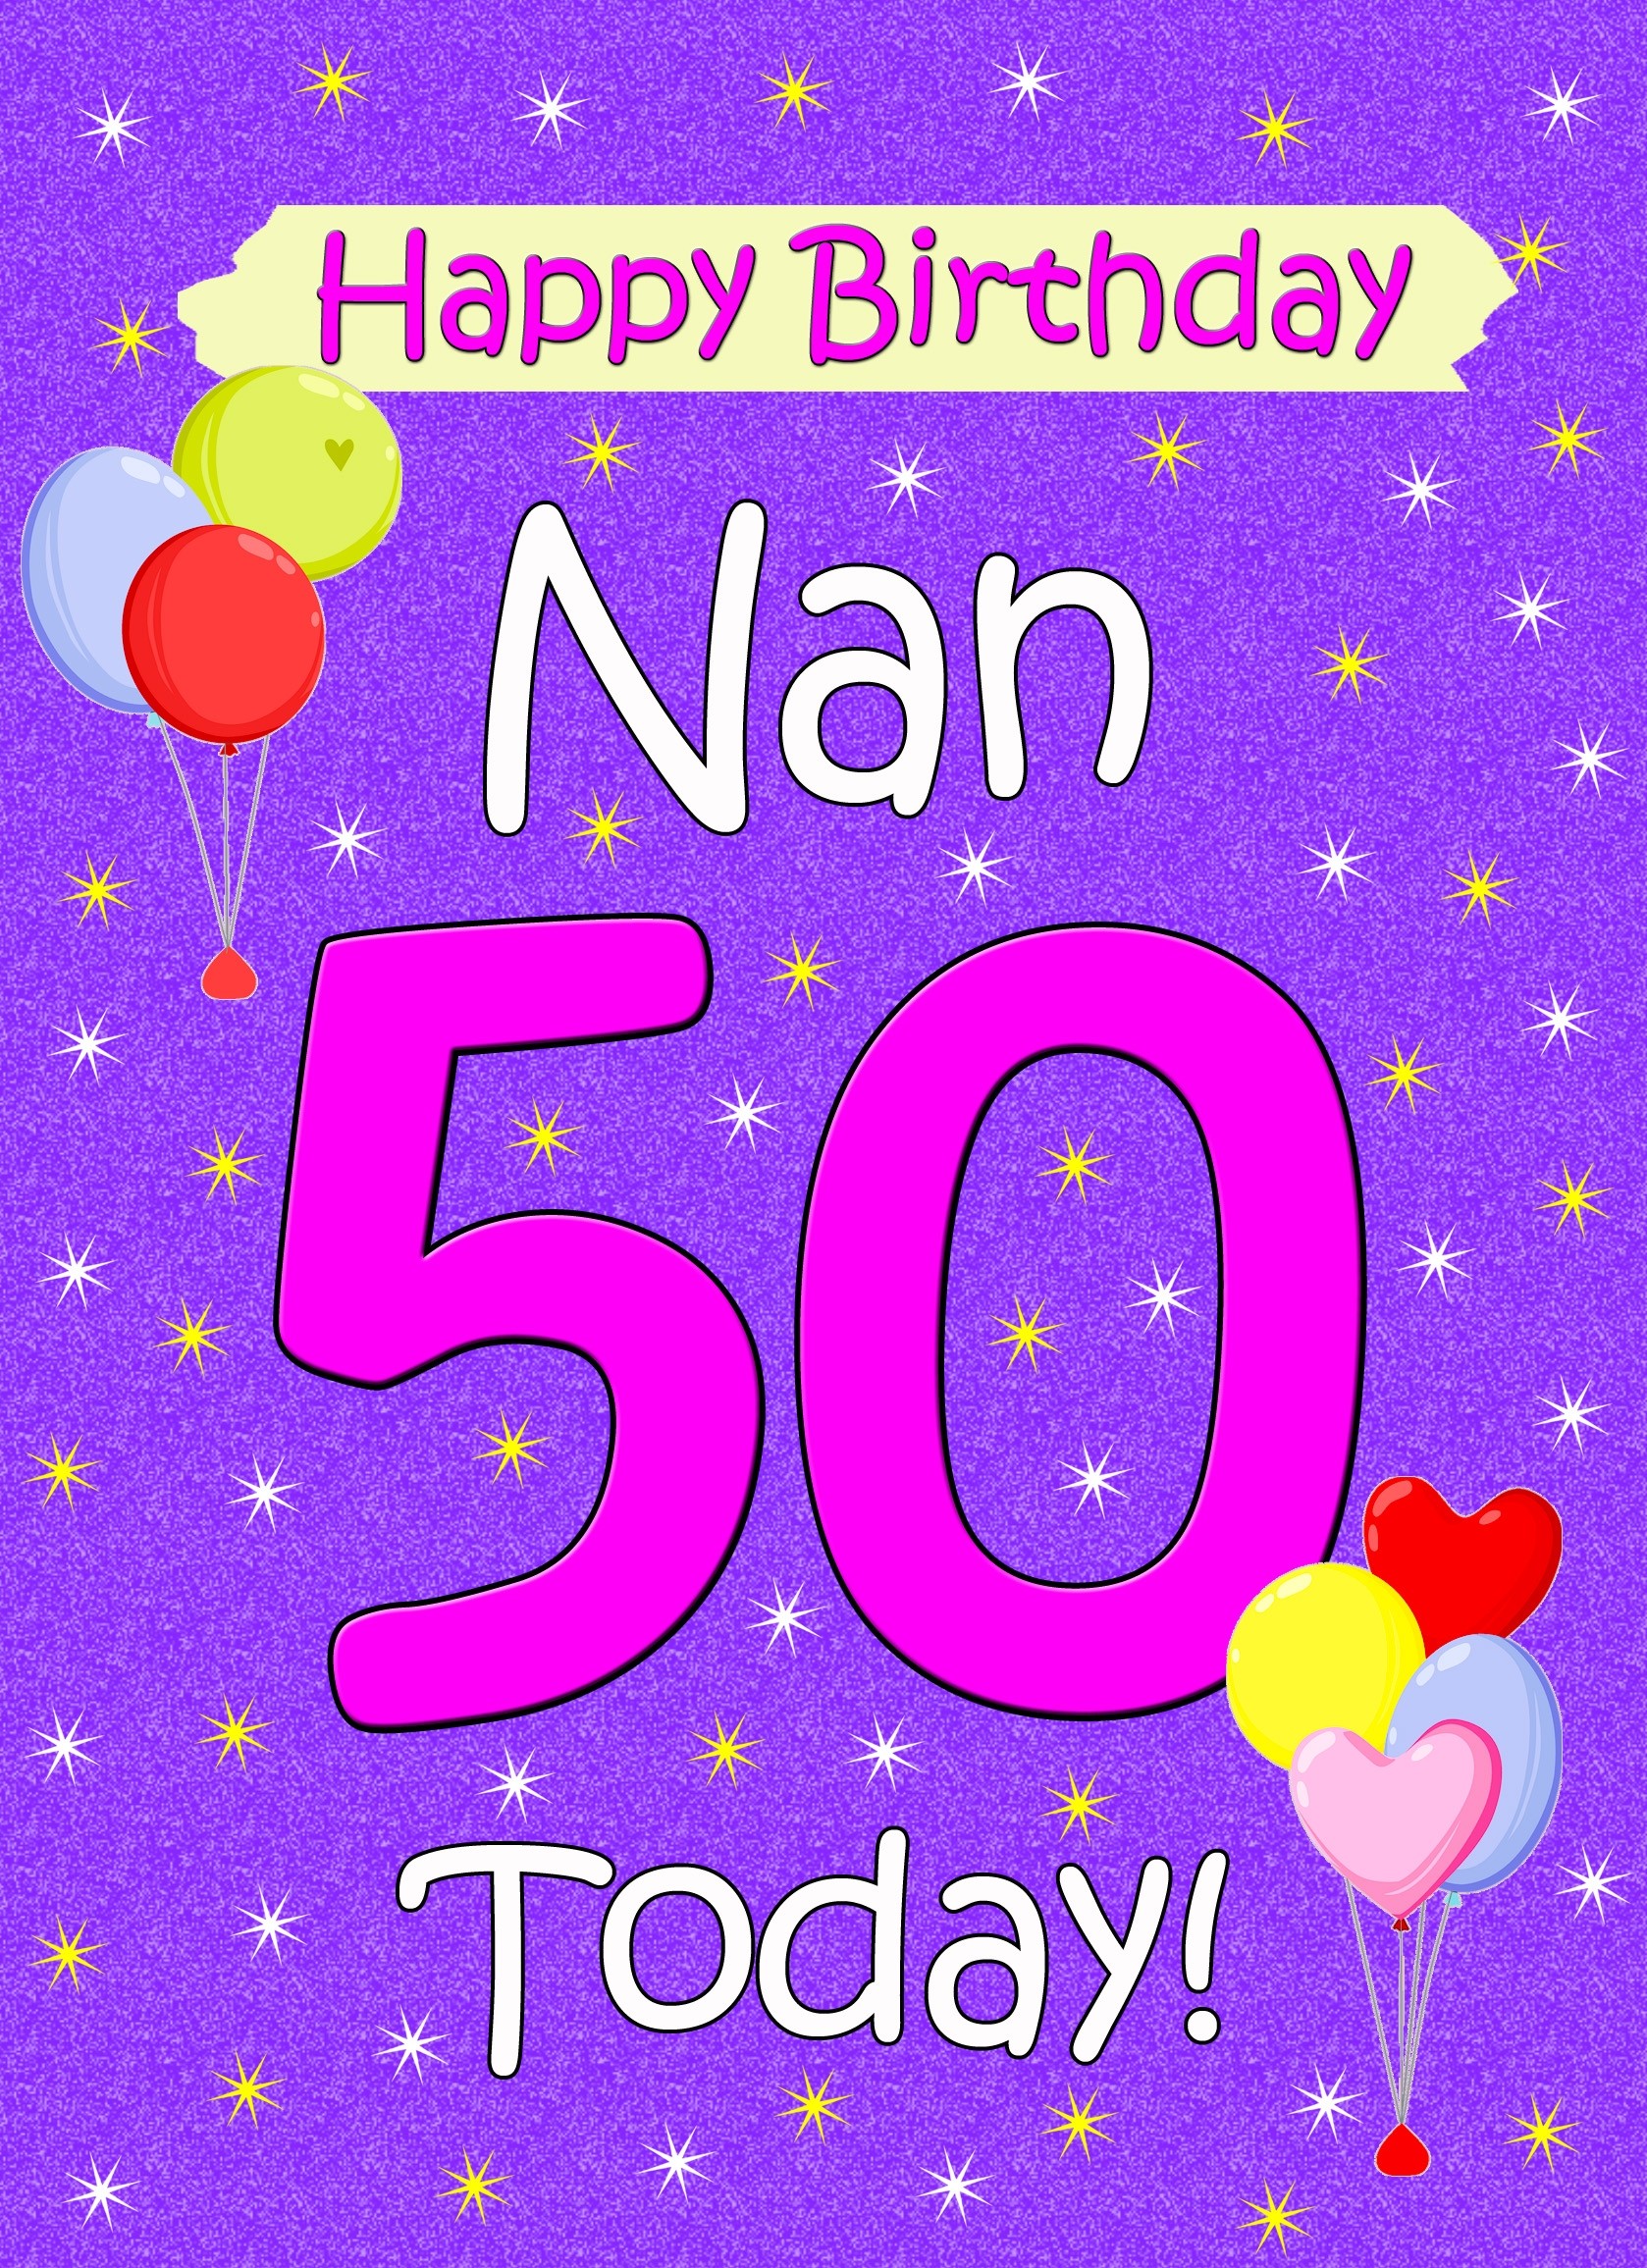 Nan 50th Birthday Card (Lilac)